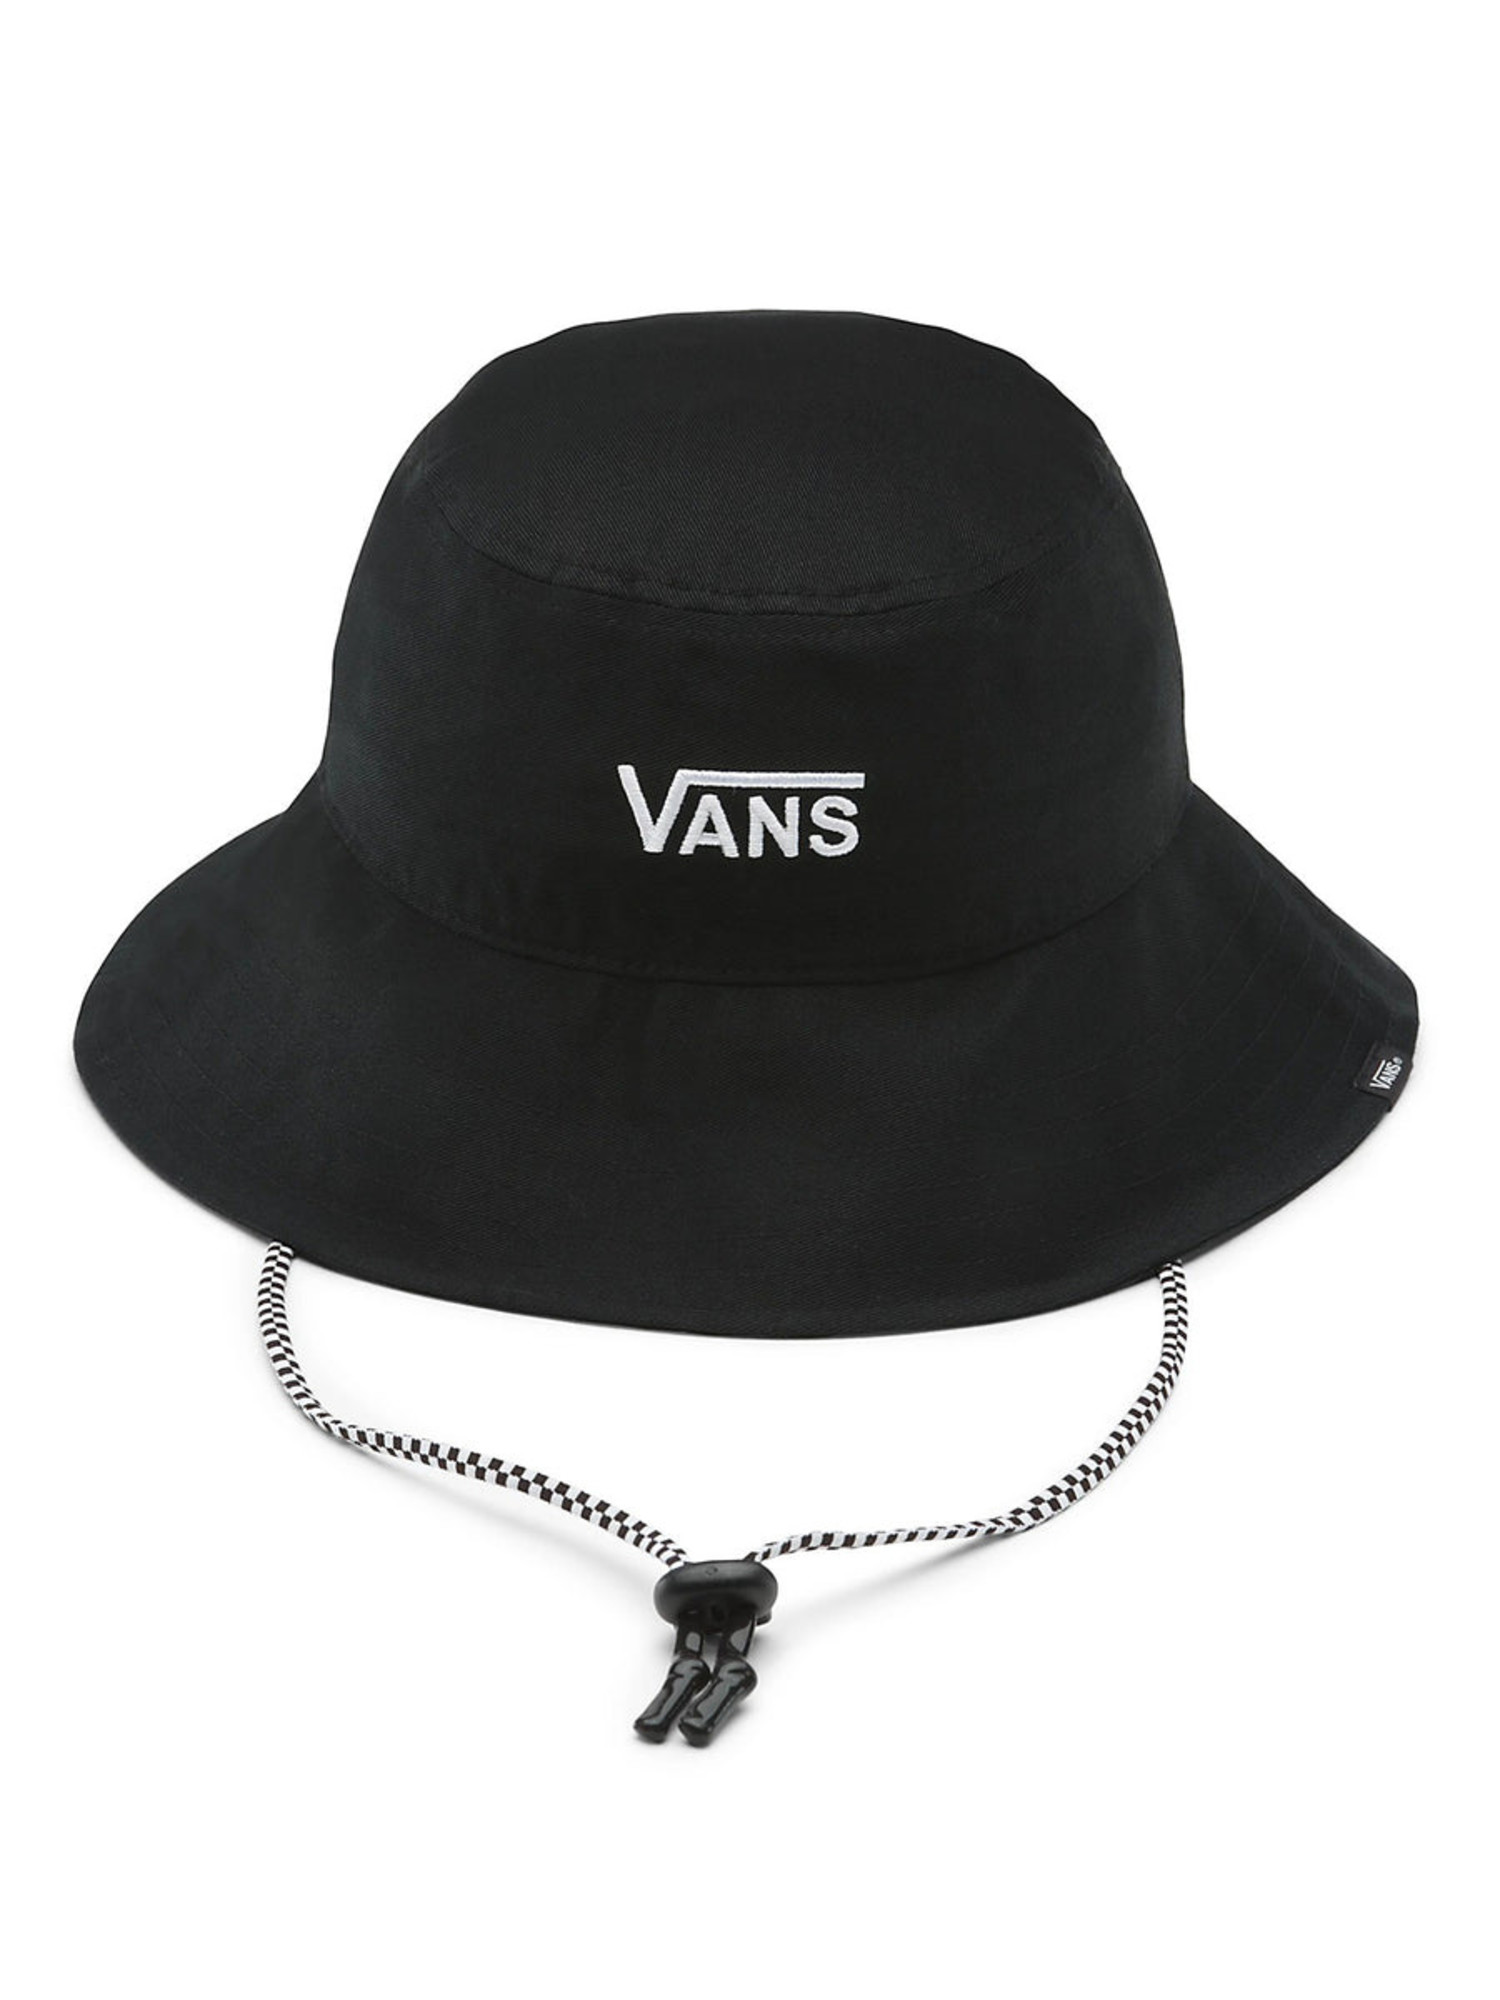 VANS W LEVEL UP BUCKET HAT BLACK/WHITE - The Choice Shop